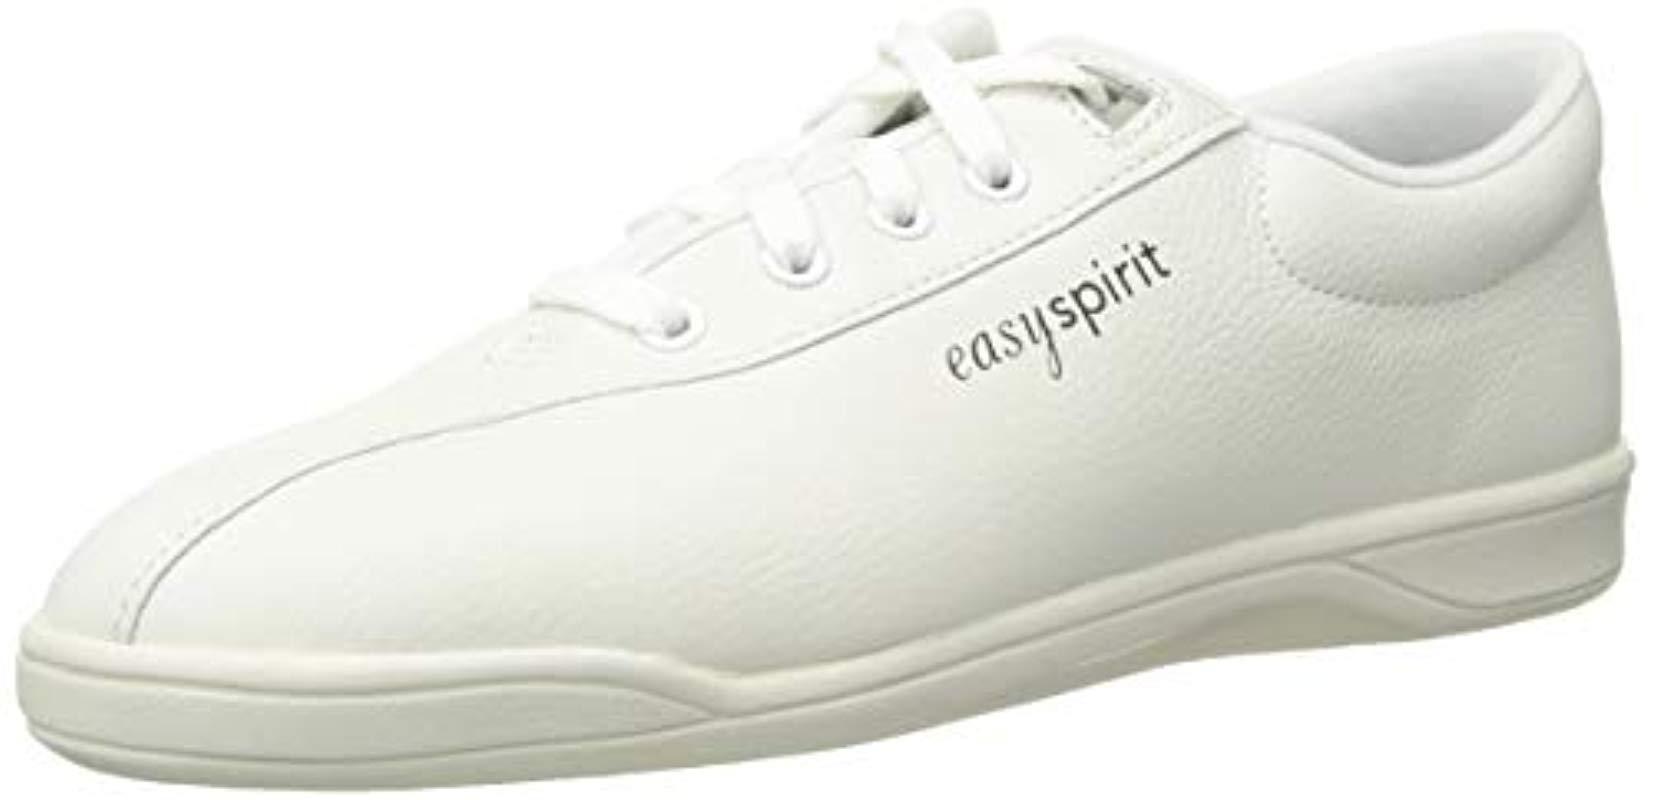 Lyst - Easy Spirit Ap1 Sport Walking Shoe, White Fab, 9 N in White